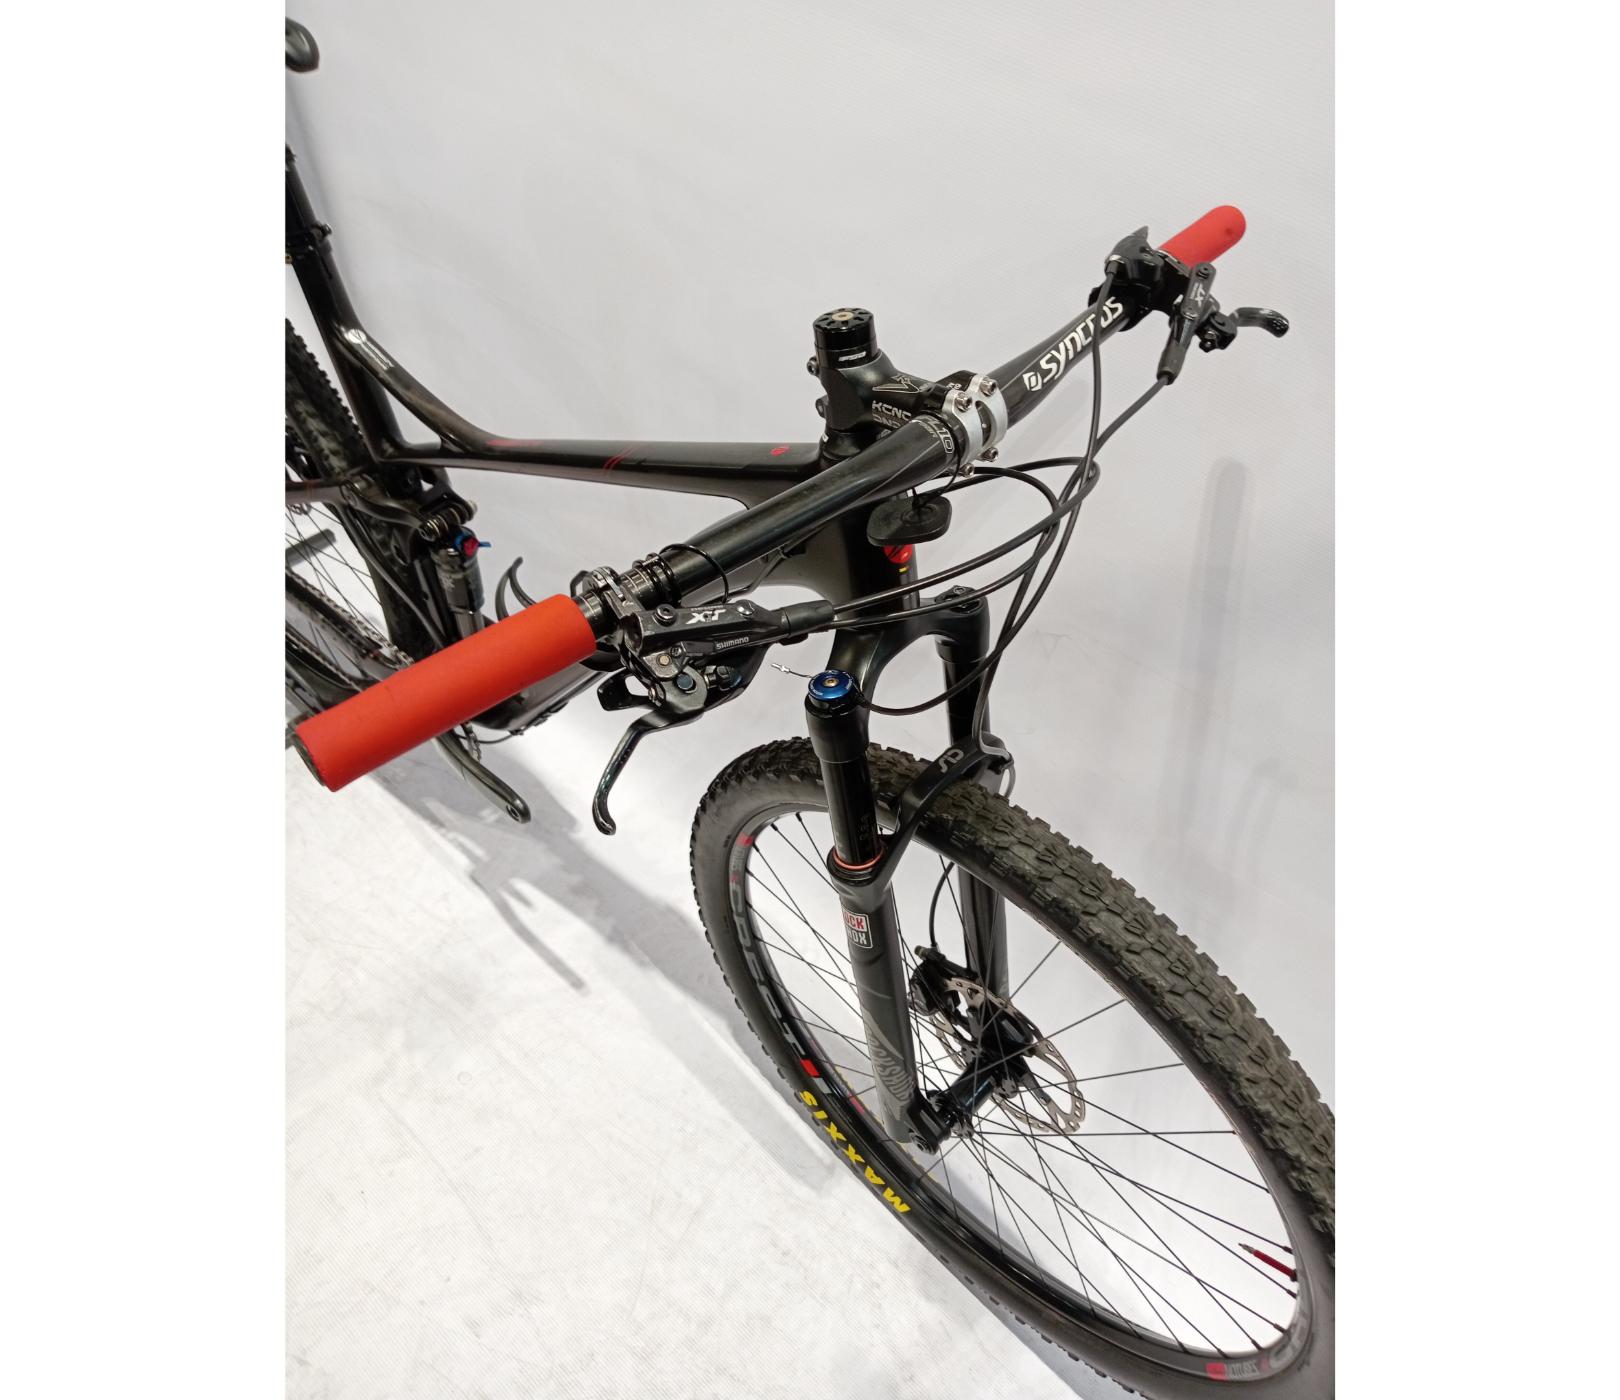 Pre-Owned Silverback Sesta Pro Carbon Dual Suspension Mountain Bike - Large